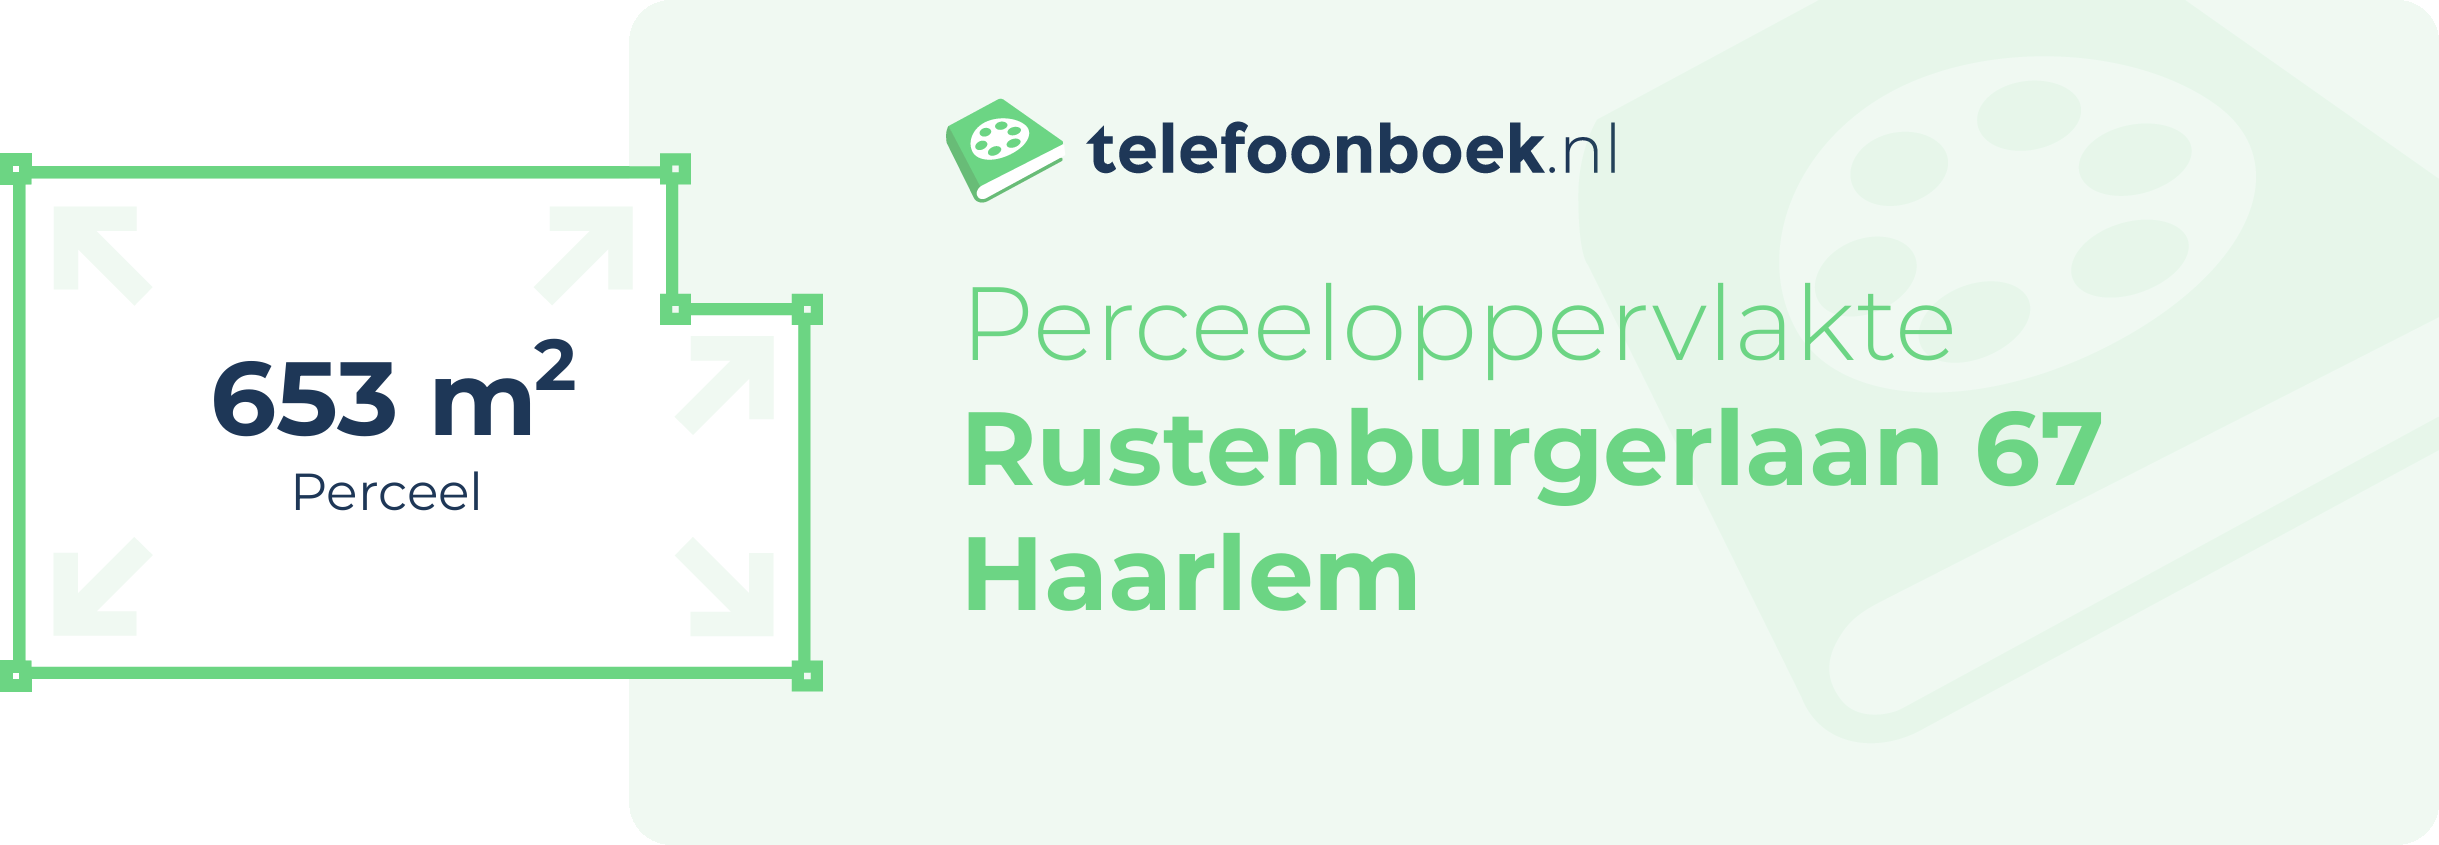 Perceeloppervlakte Rustenburgerlaan 67 Haarlem